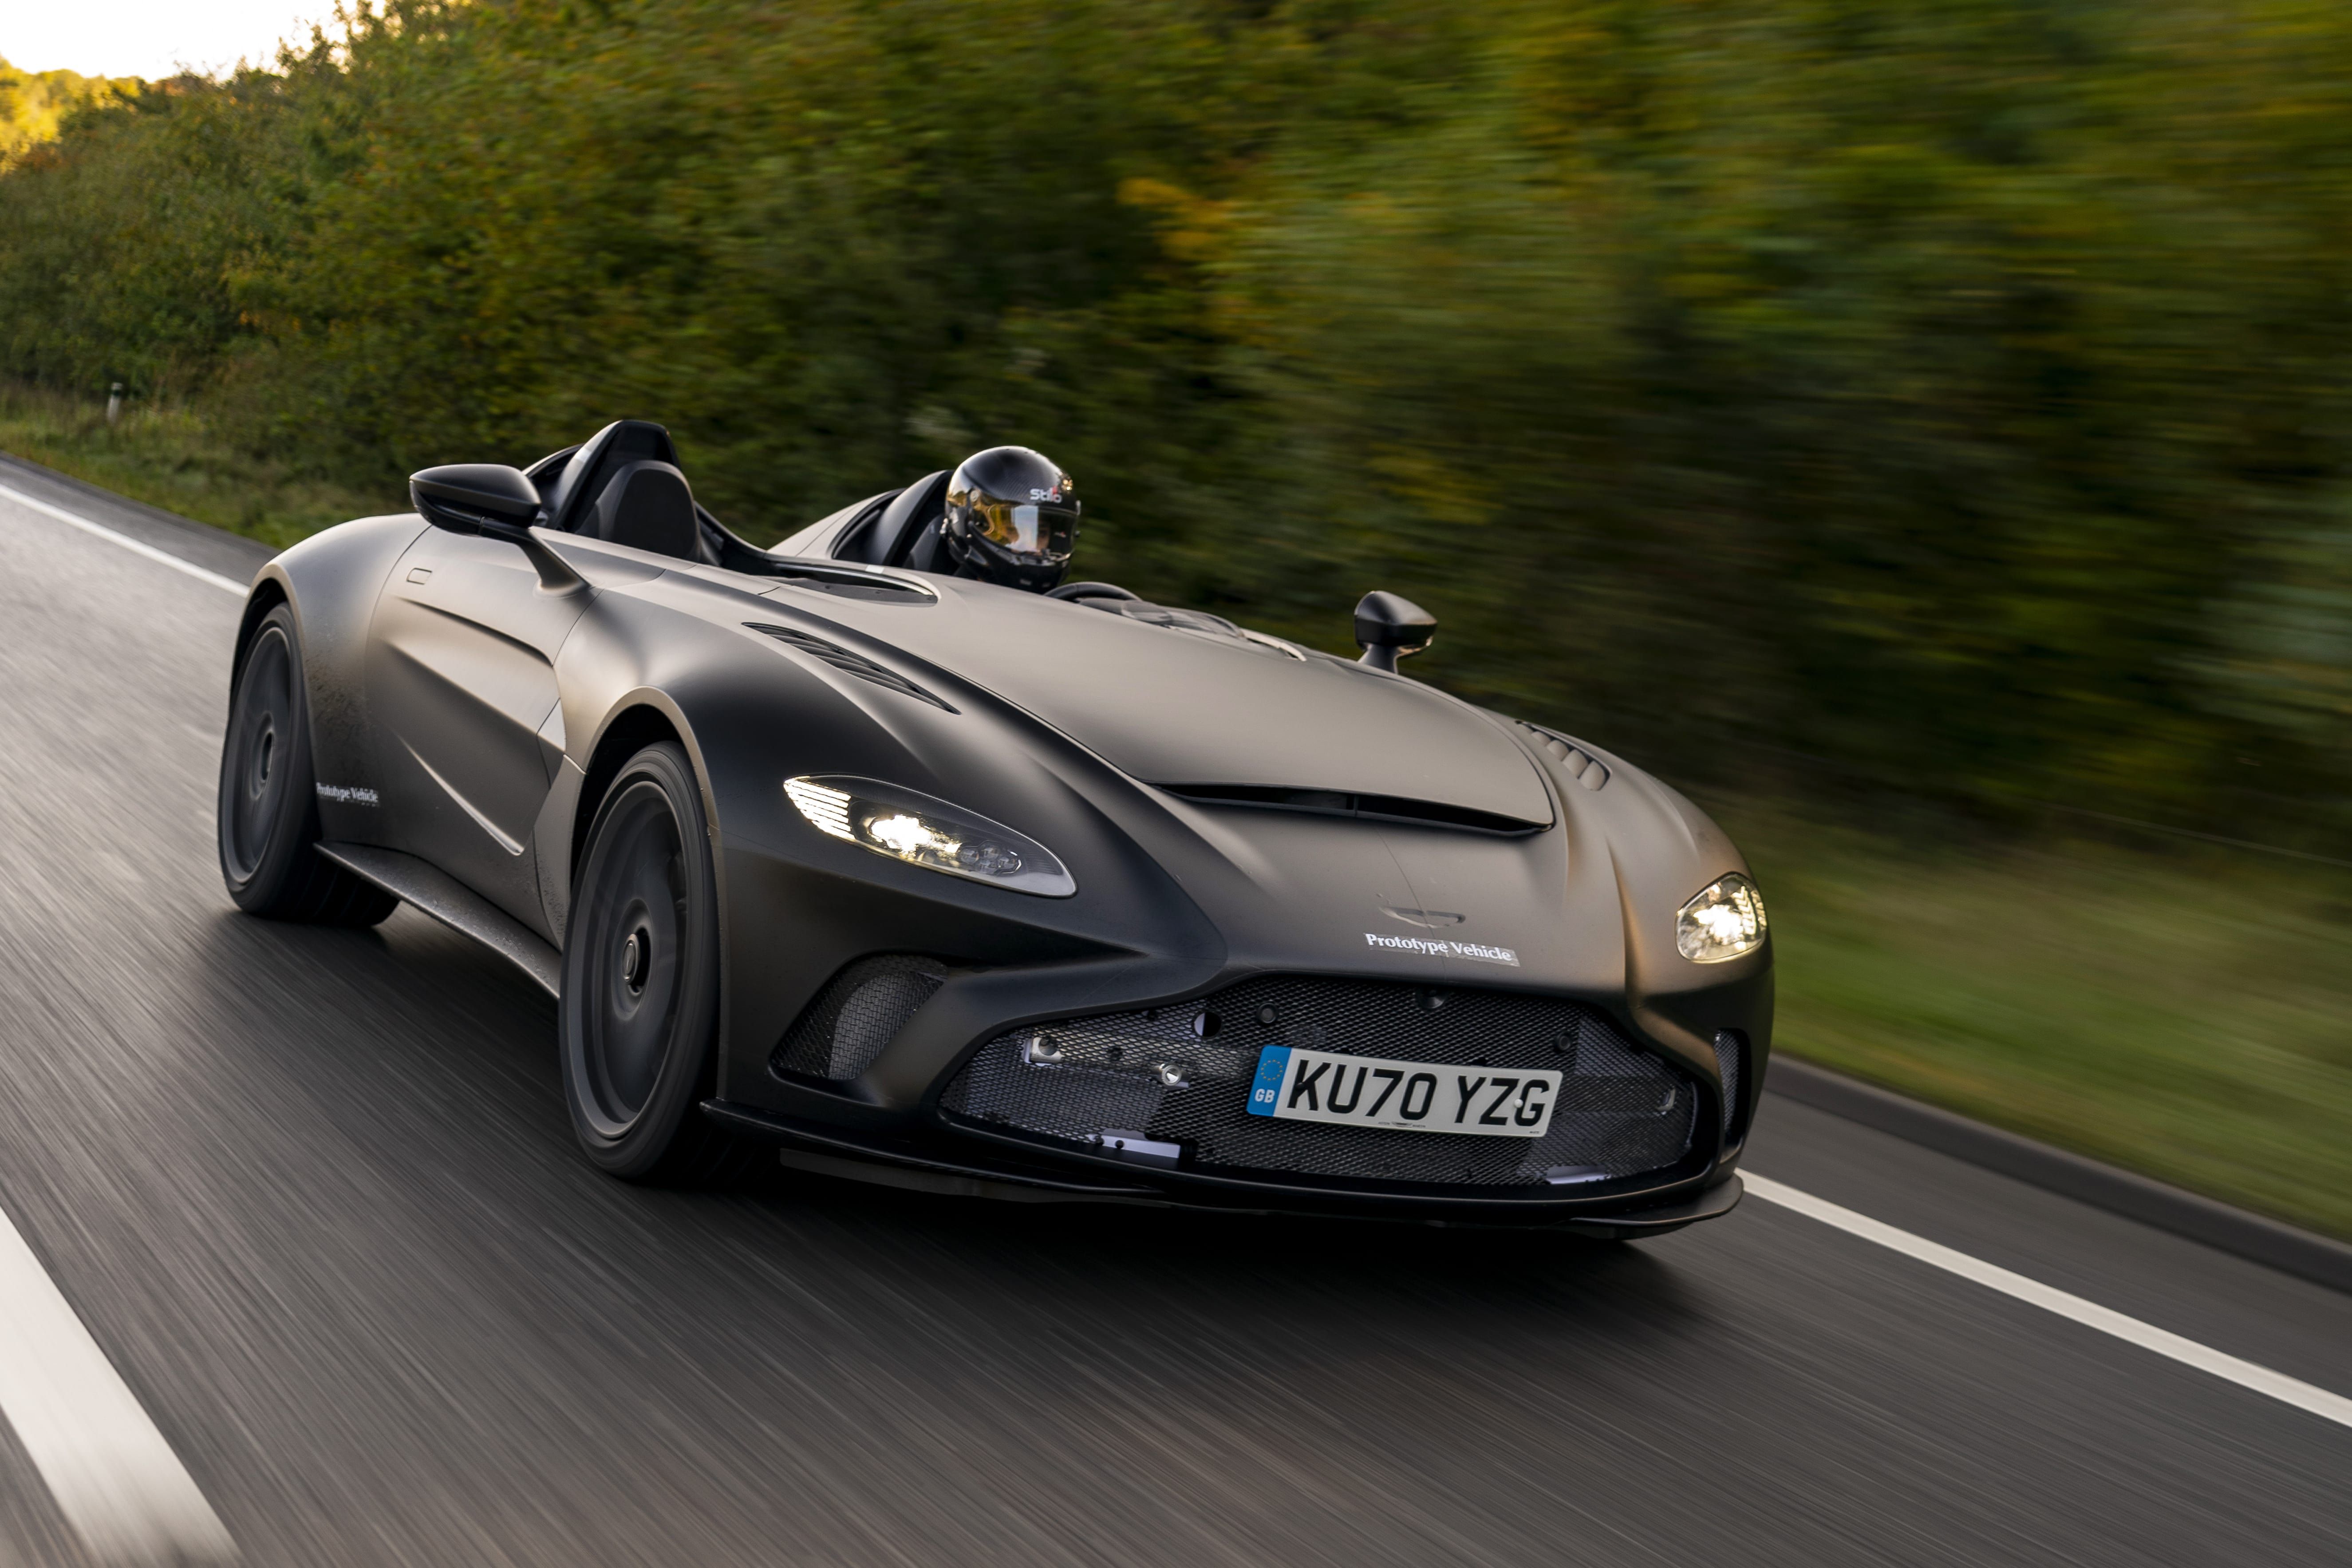 New Photo Show Aston Martin V12 Speedster Haulin' British Buns